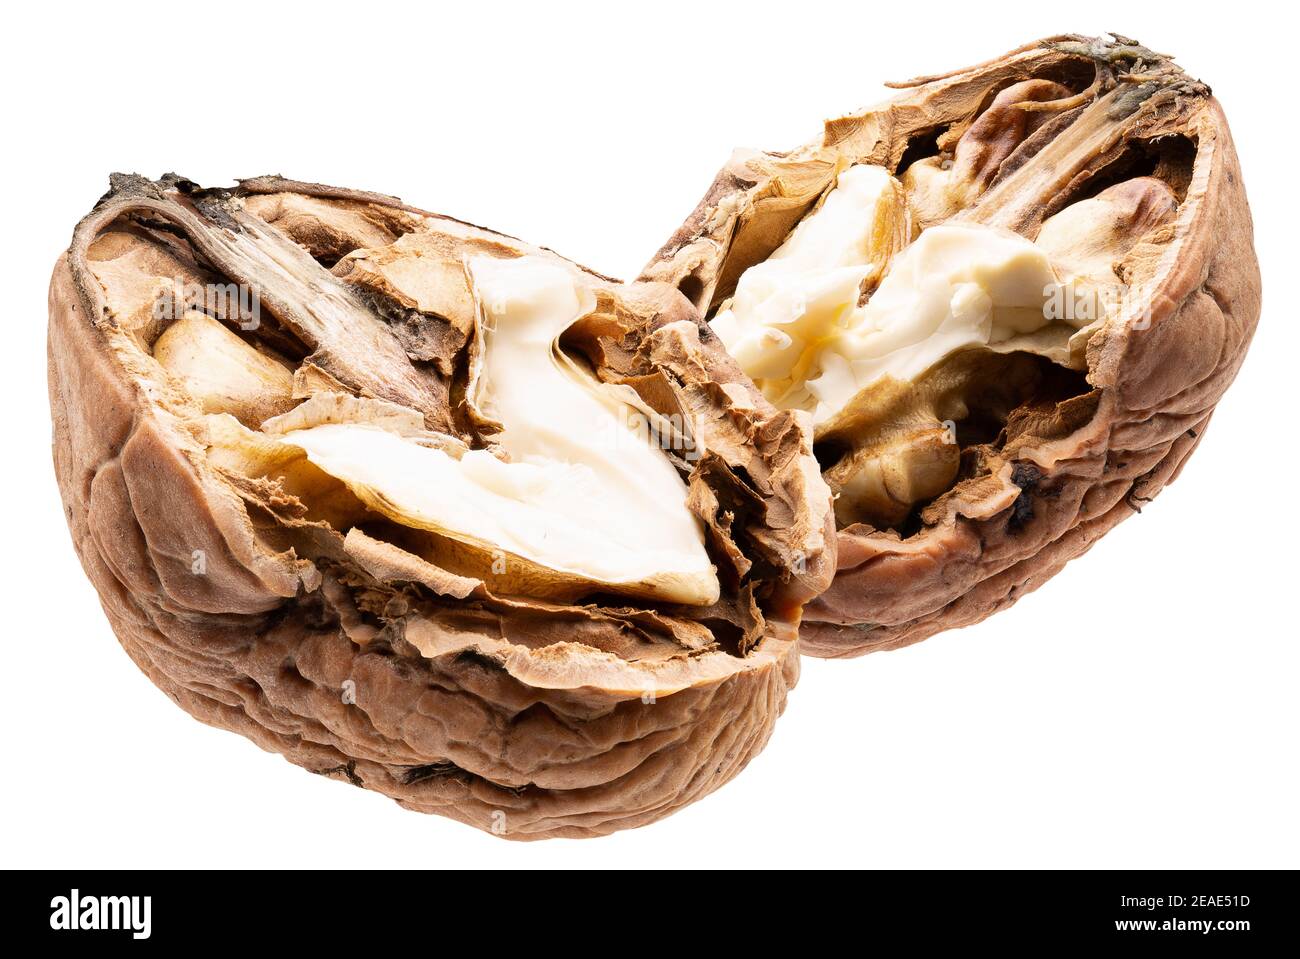 halves of walnut isolated on a white background. Stock Photo